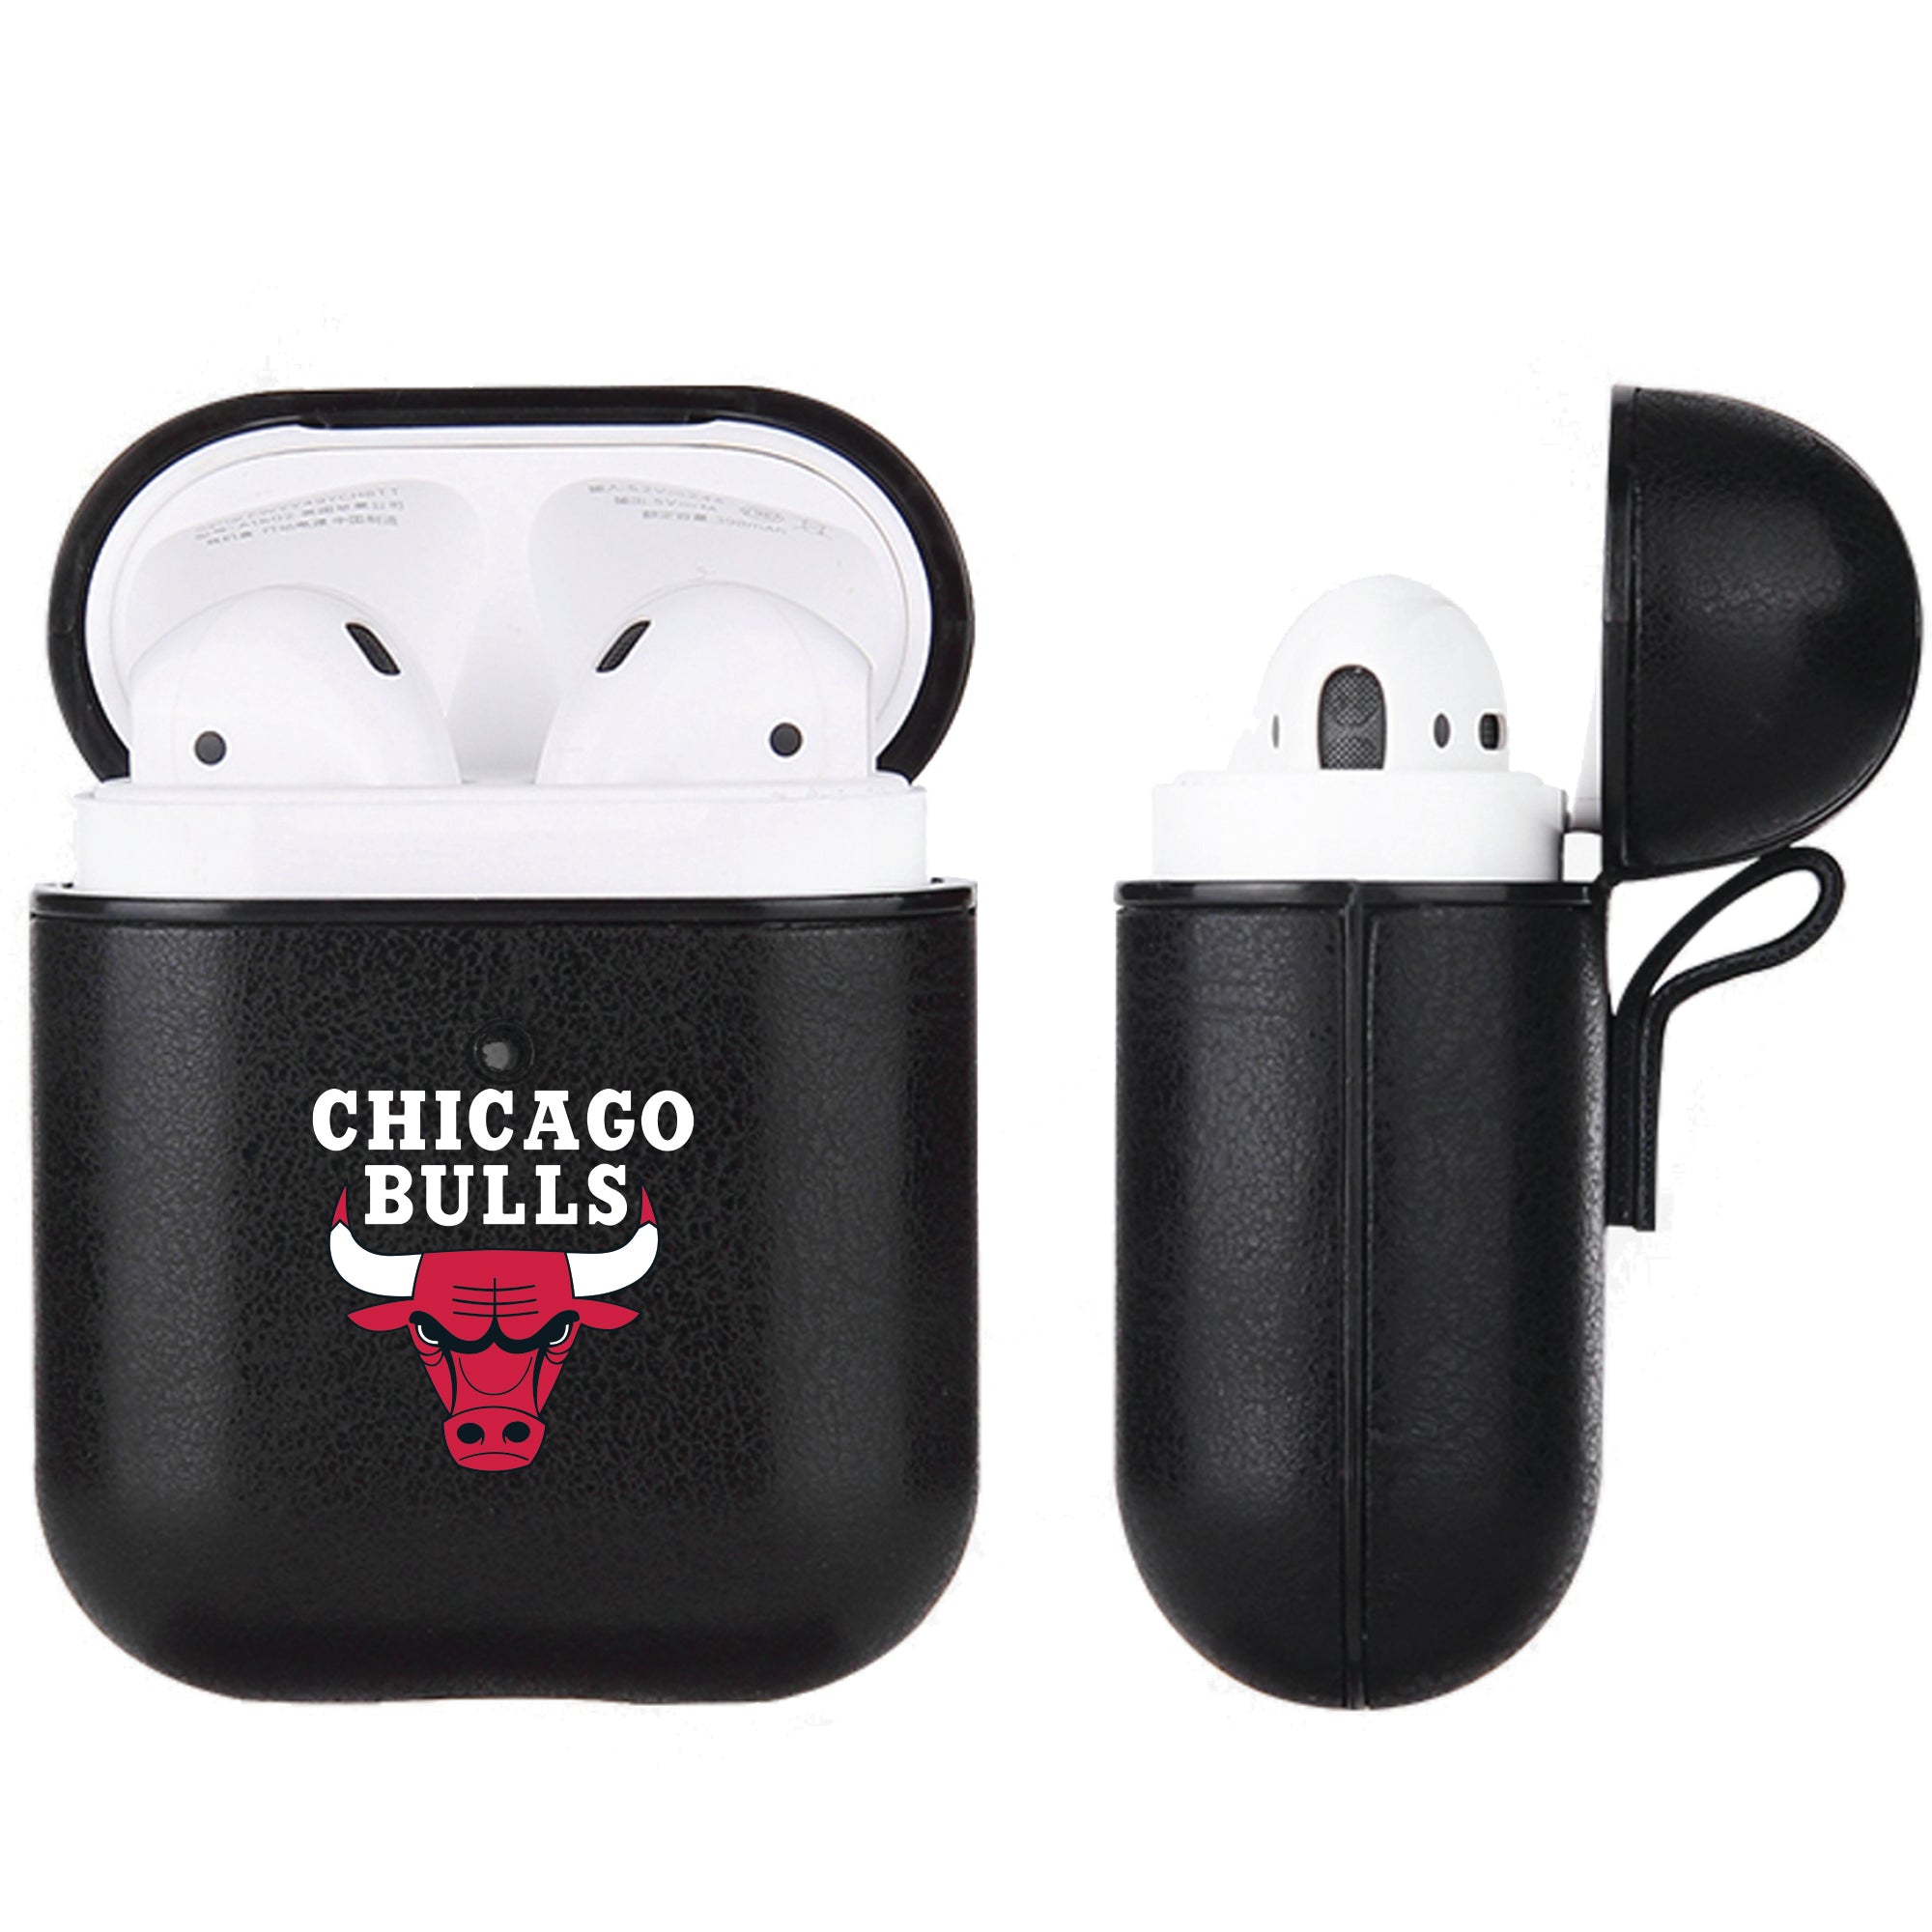 Chicago Bulls Black Apple Air Pod Leather Case